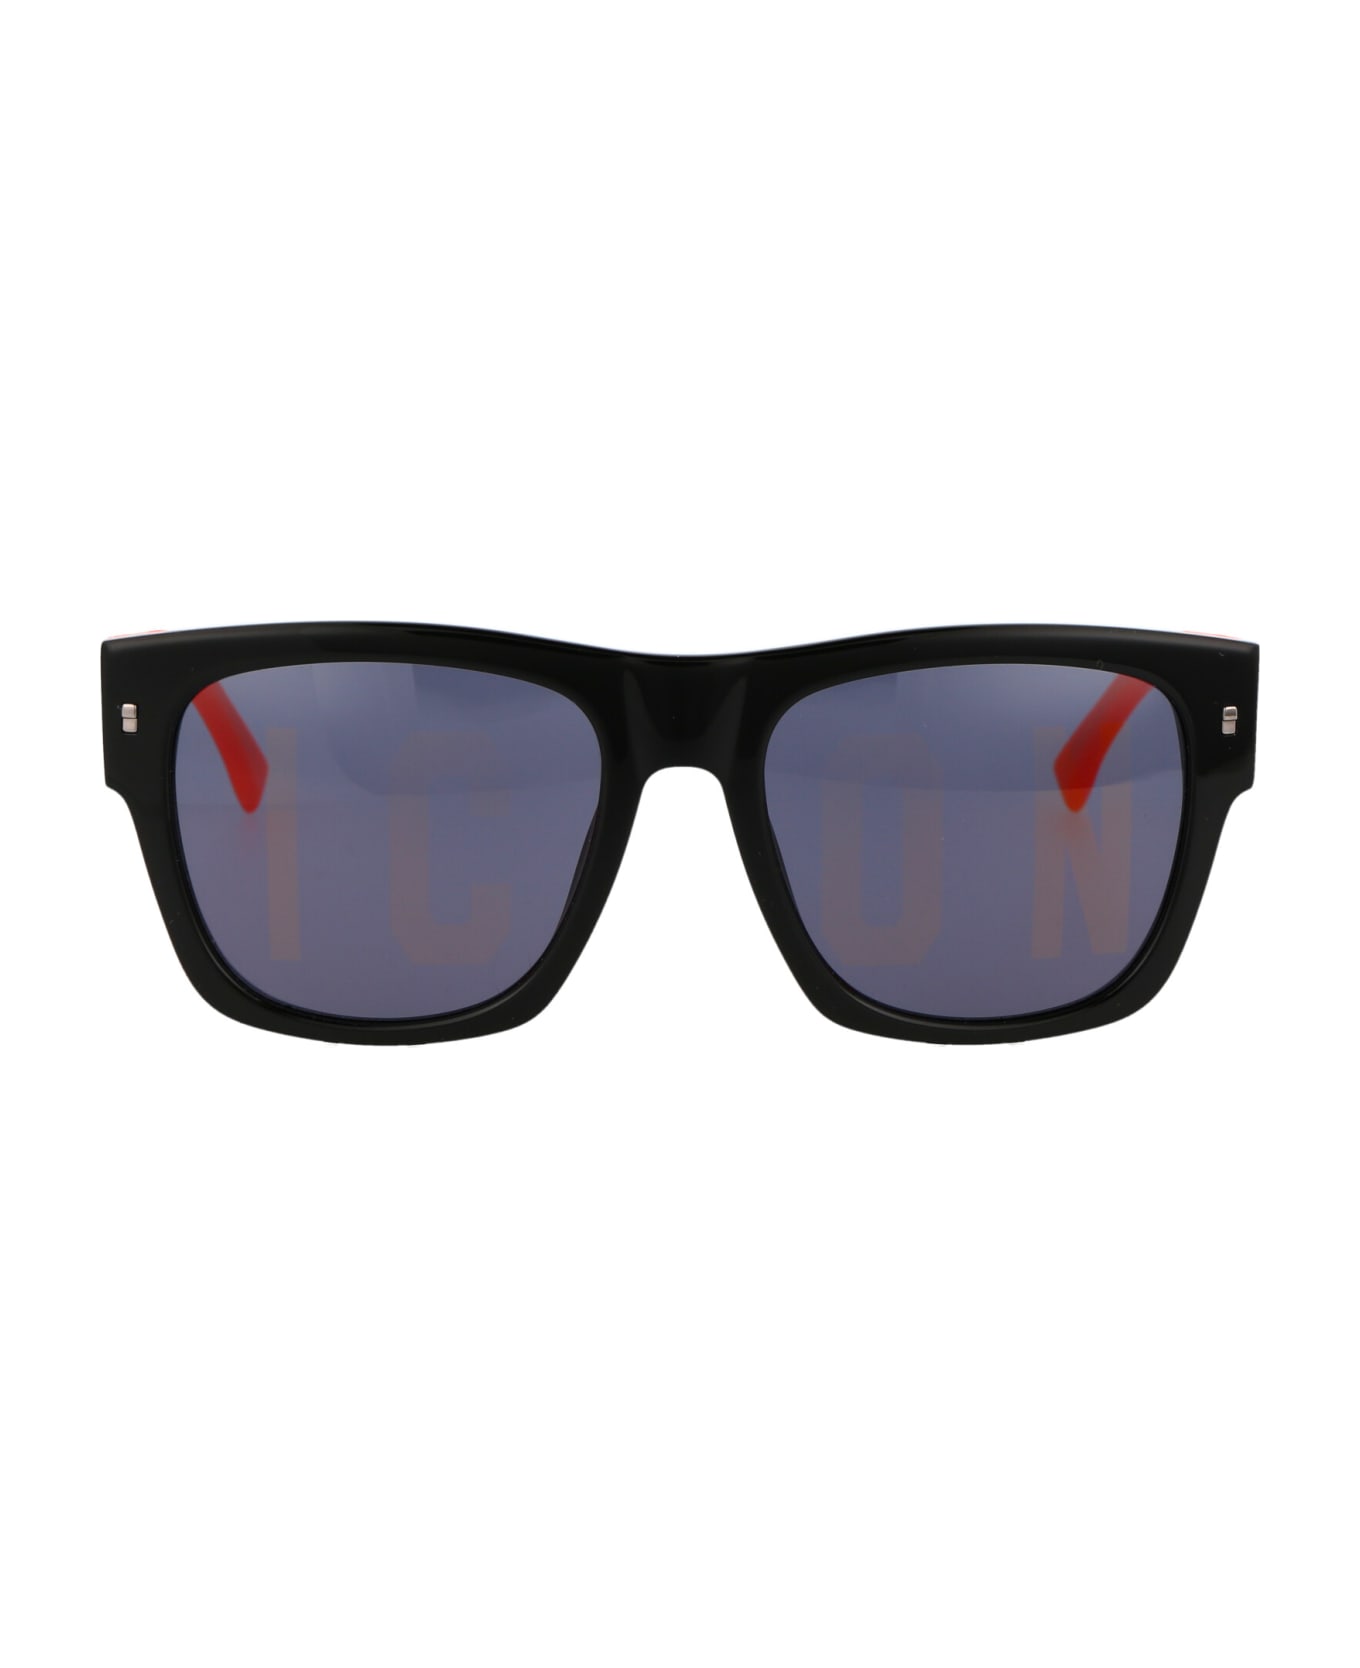 Dsquared2 Eyewear Icon 0004/s Sunglasses latest - 8AJ Morgan round sunglasses latest in black with studs